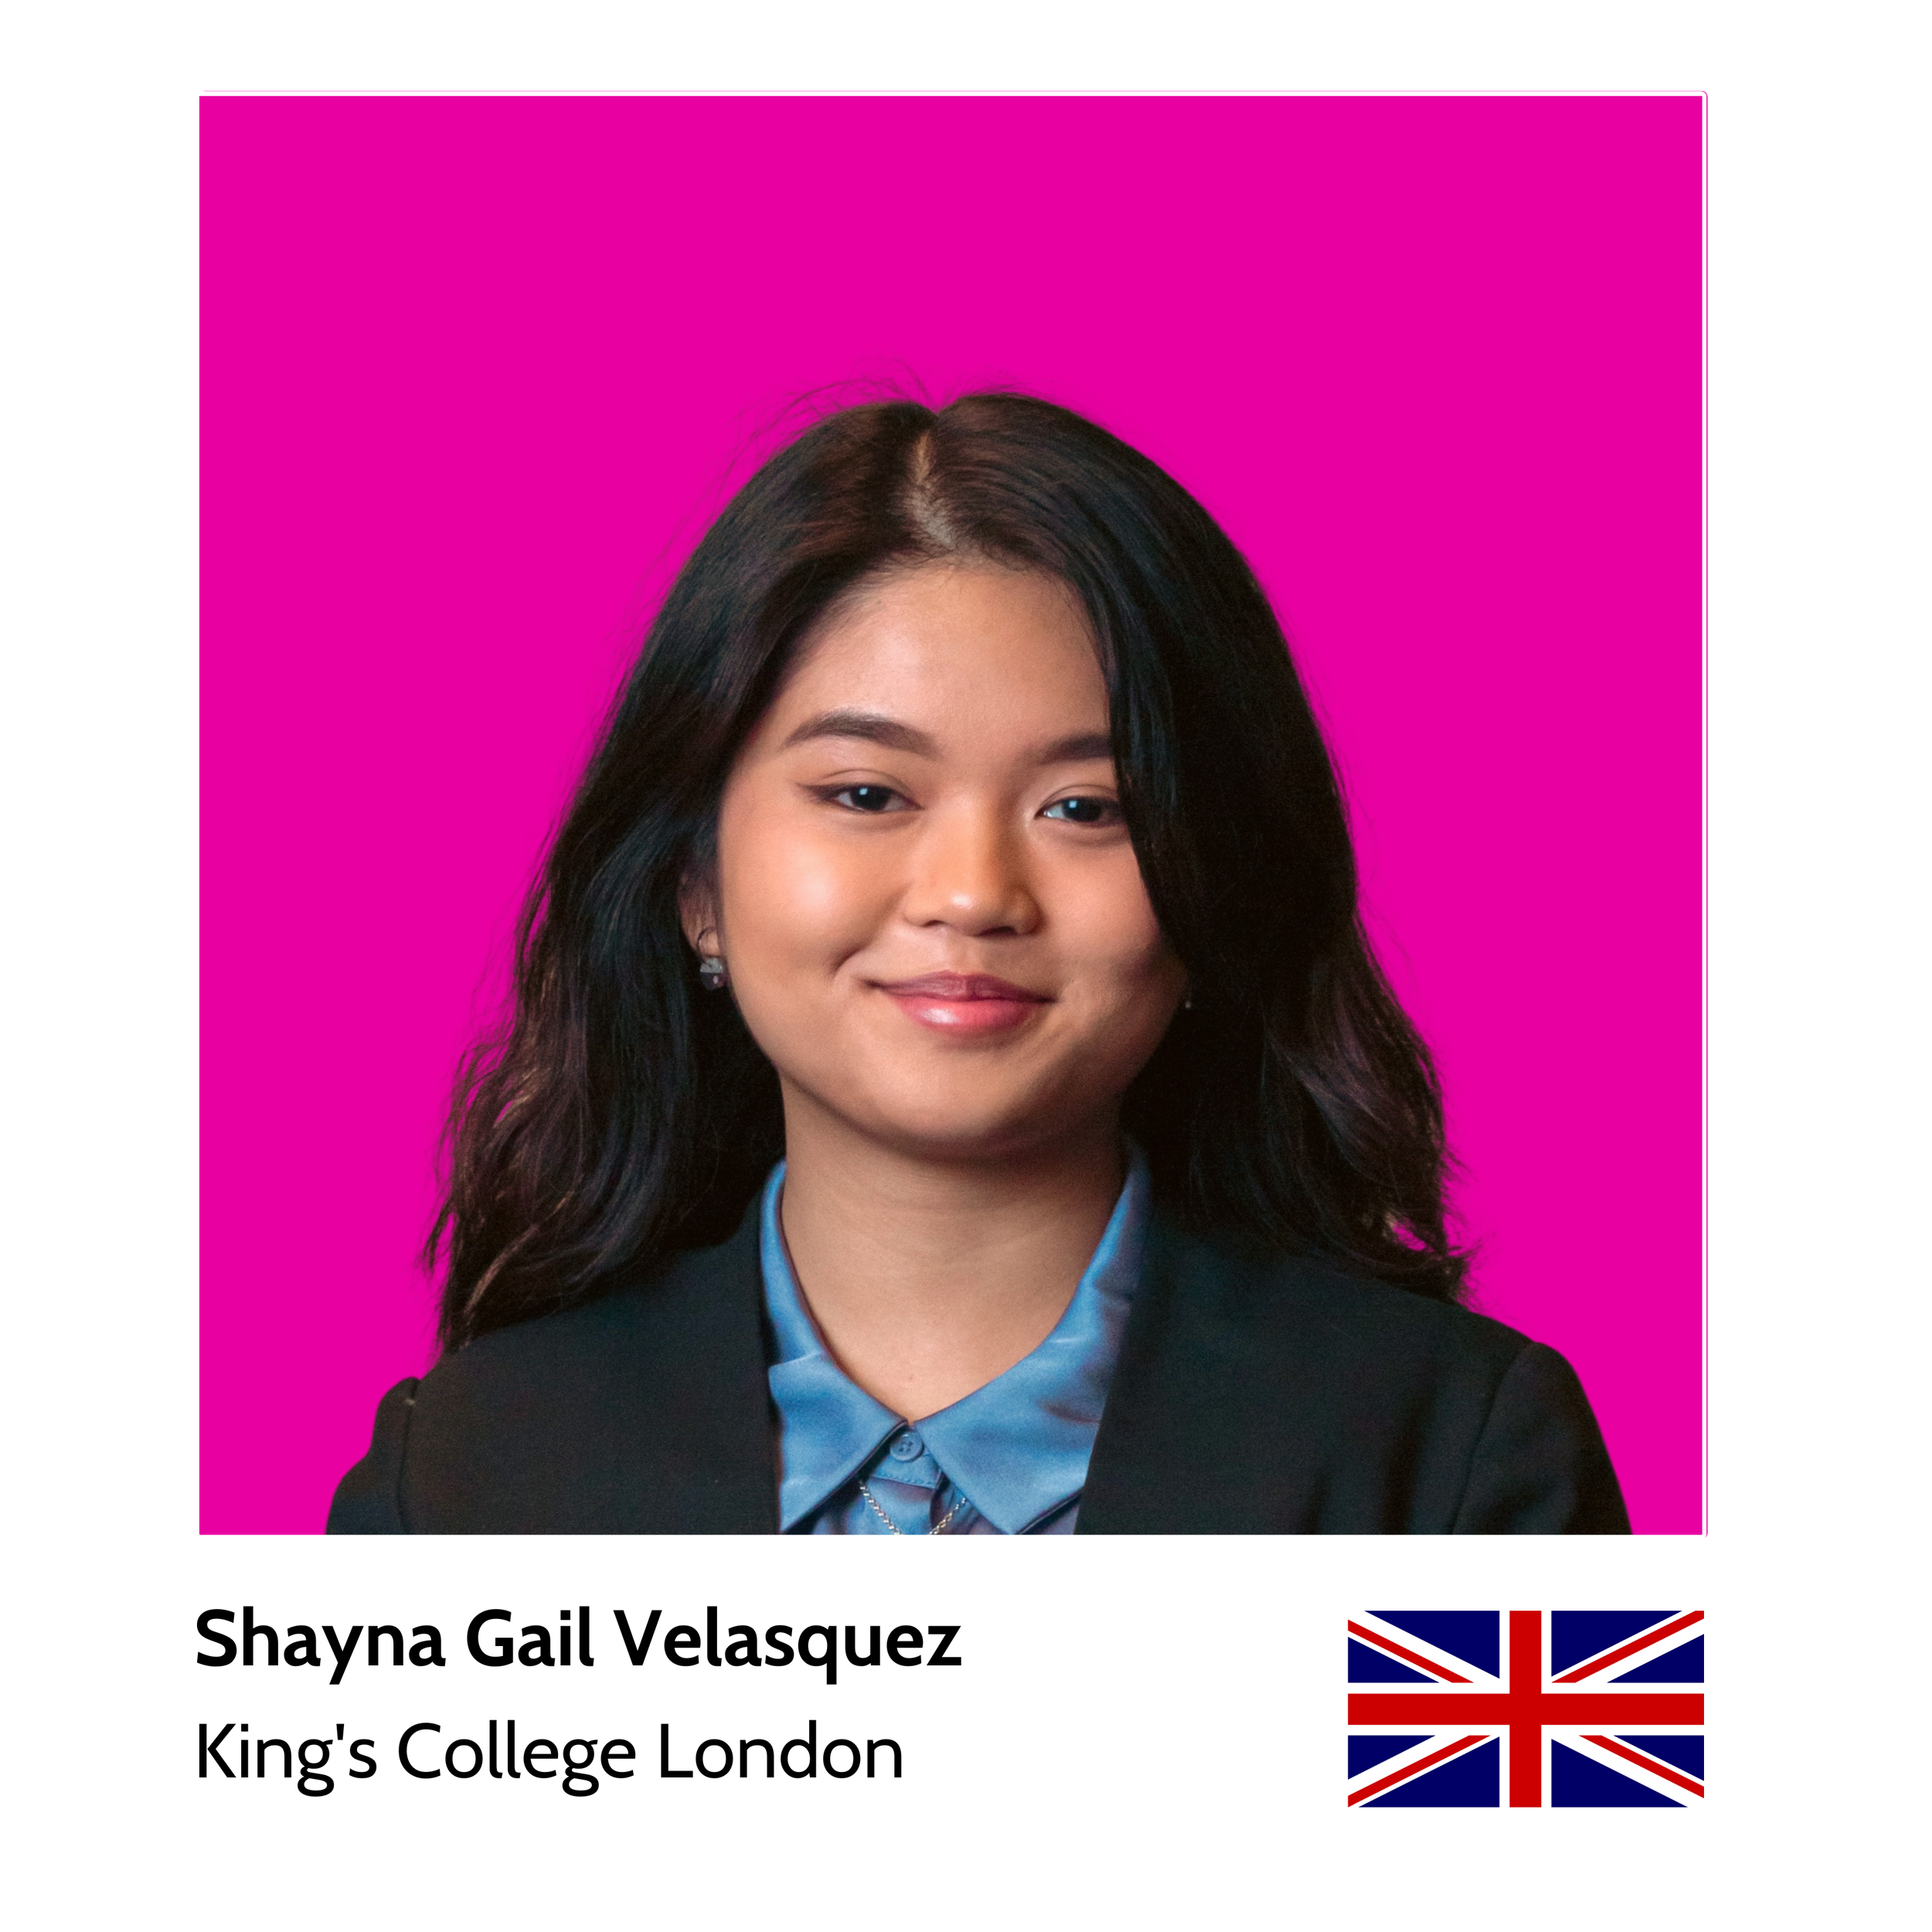 Your_Big_Year_ibm_z_student_ambassador_Shayna Gail Velasquez_Kings College London.png